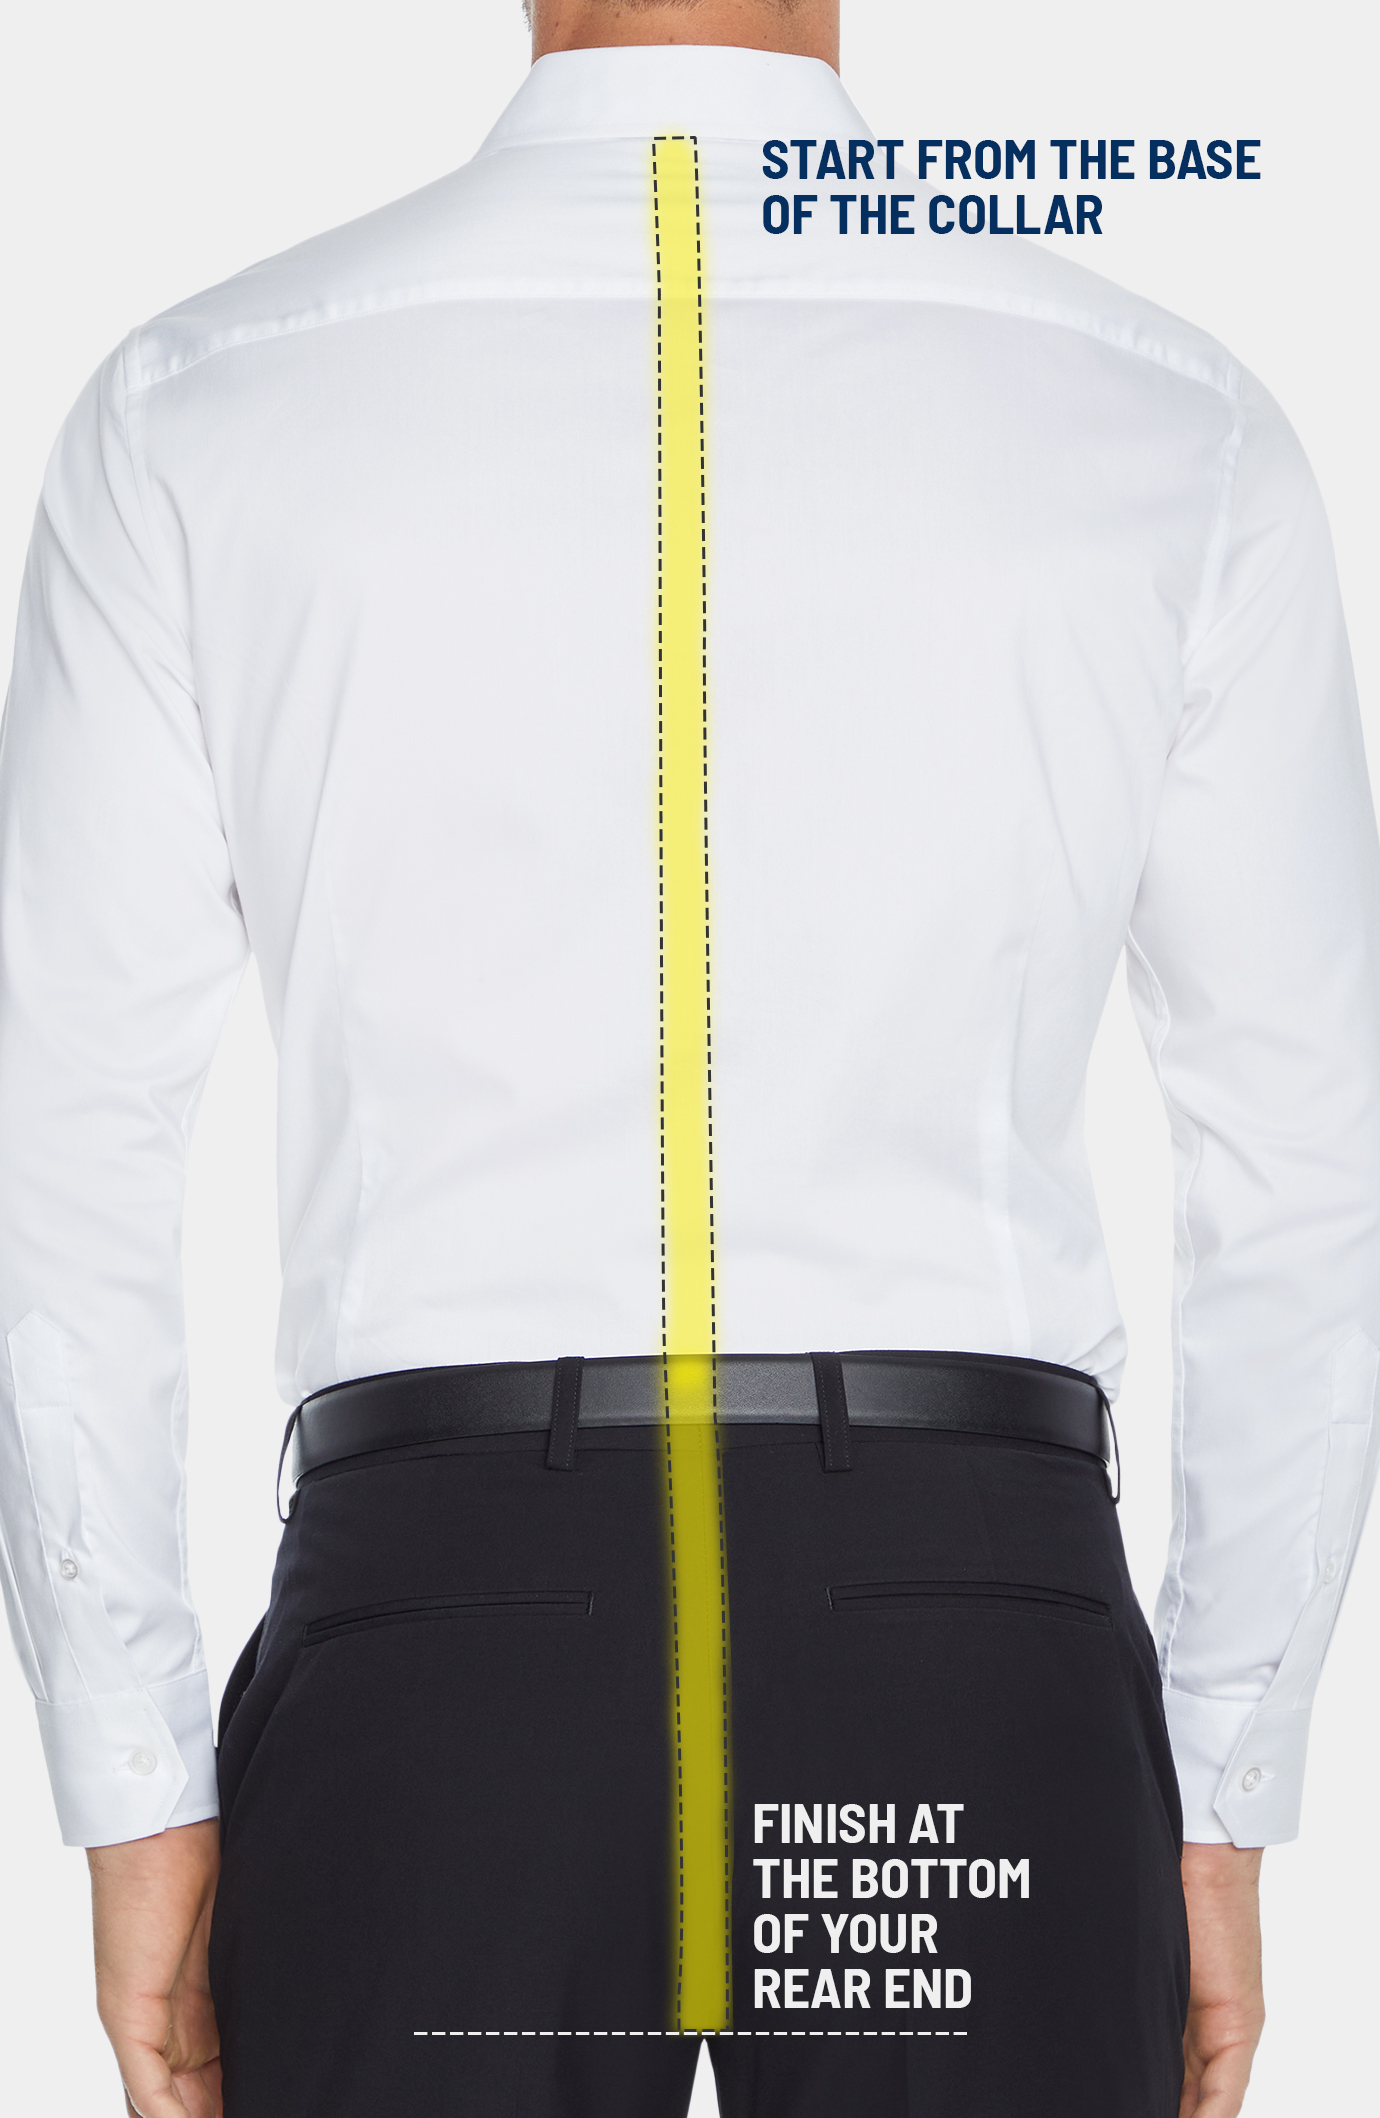 How to measure dress shirt's length